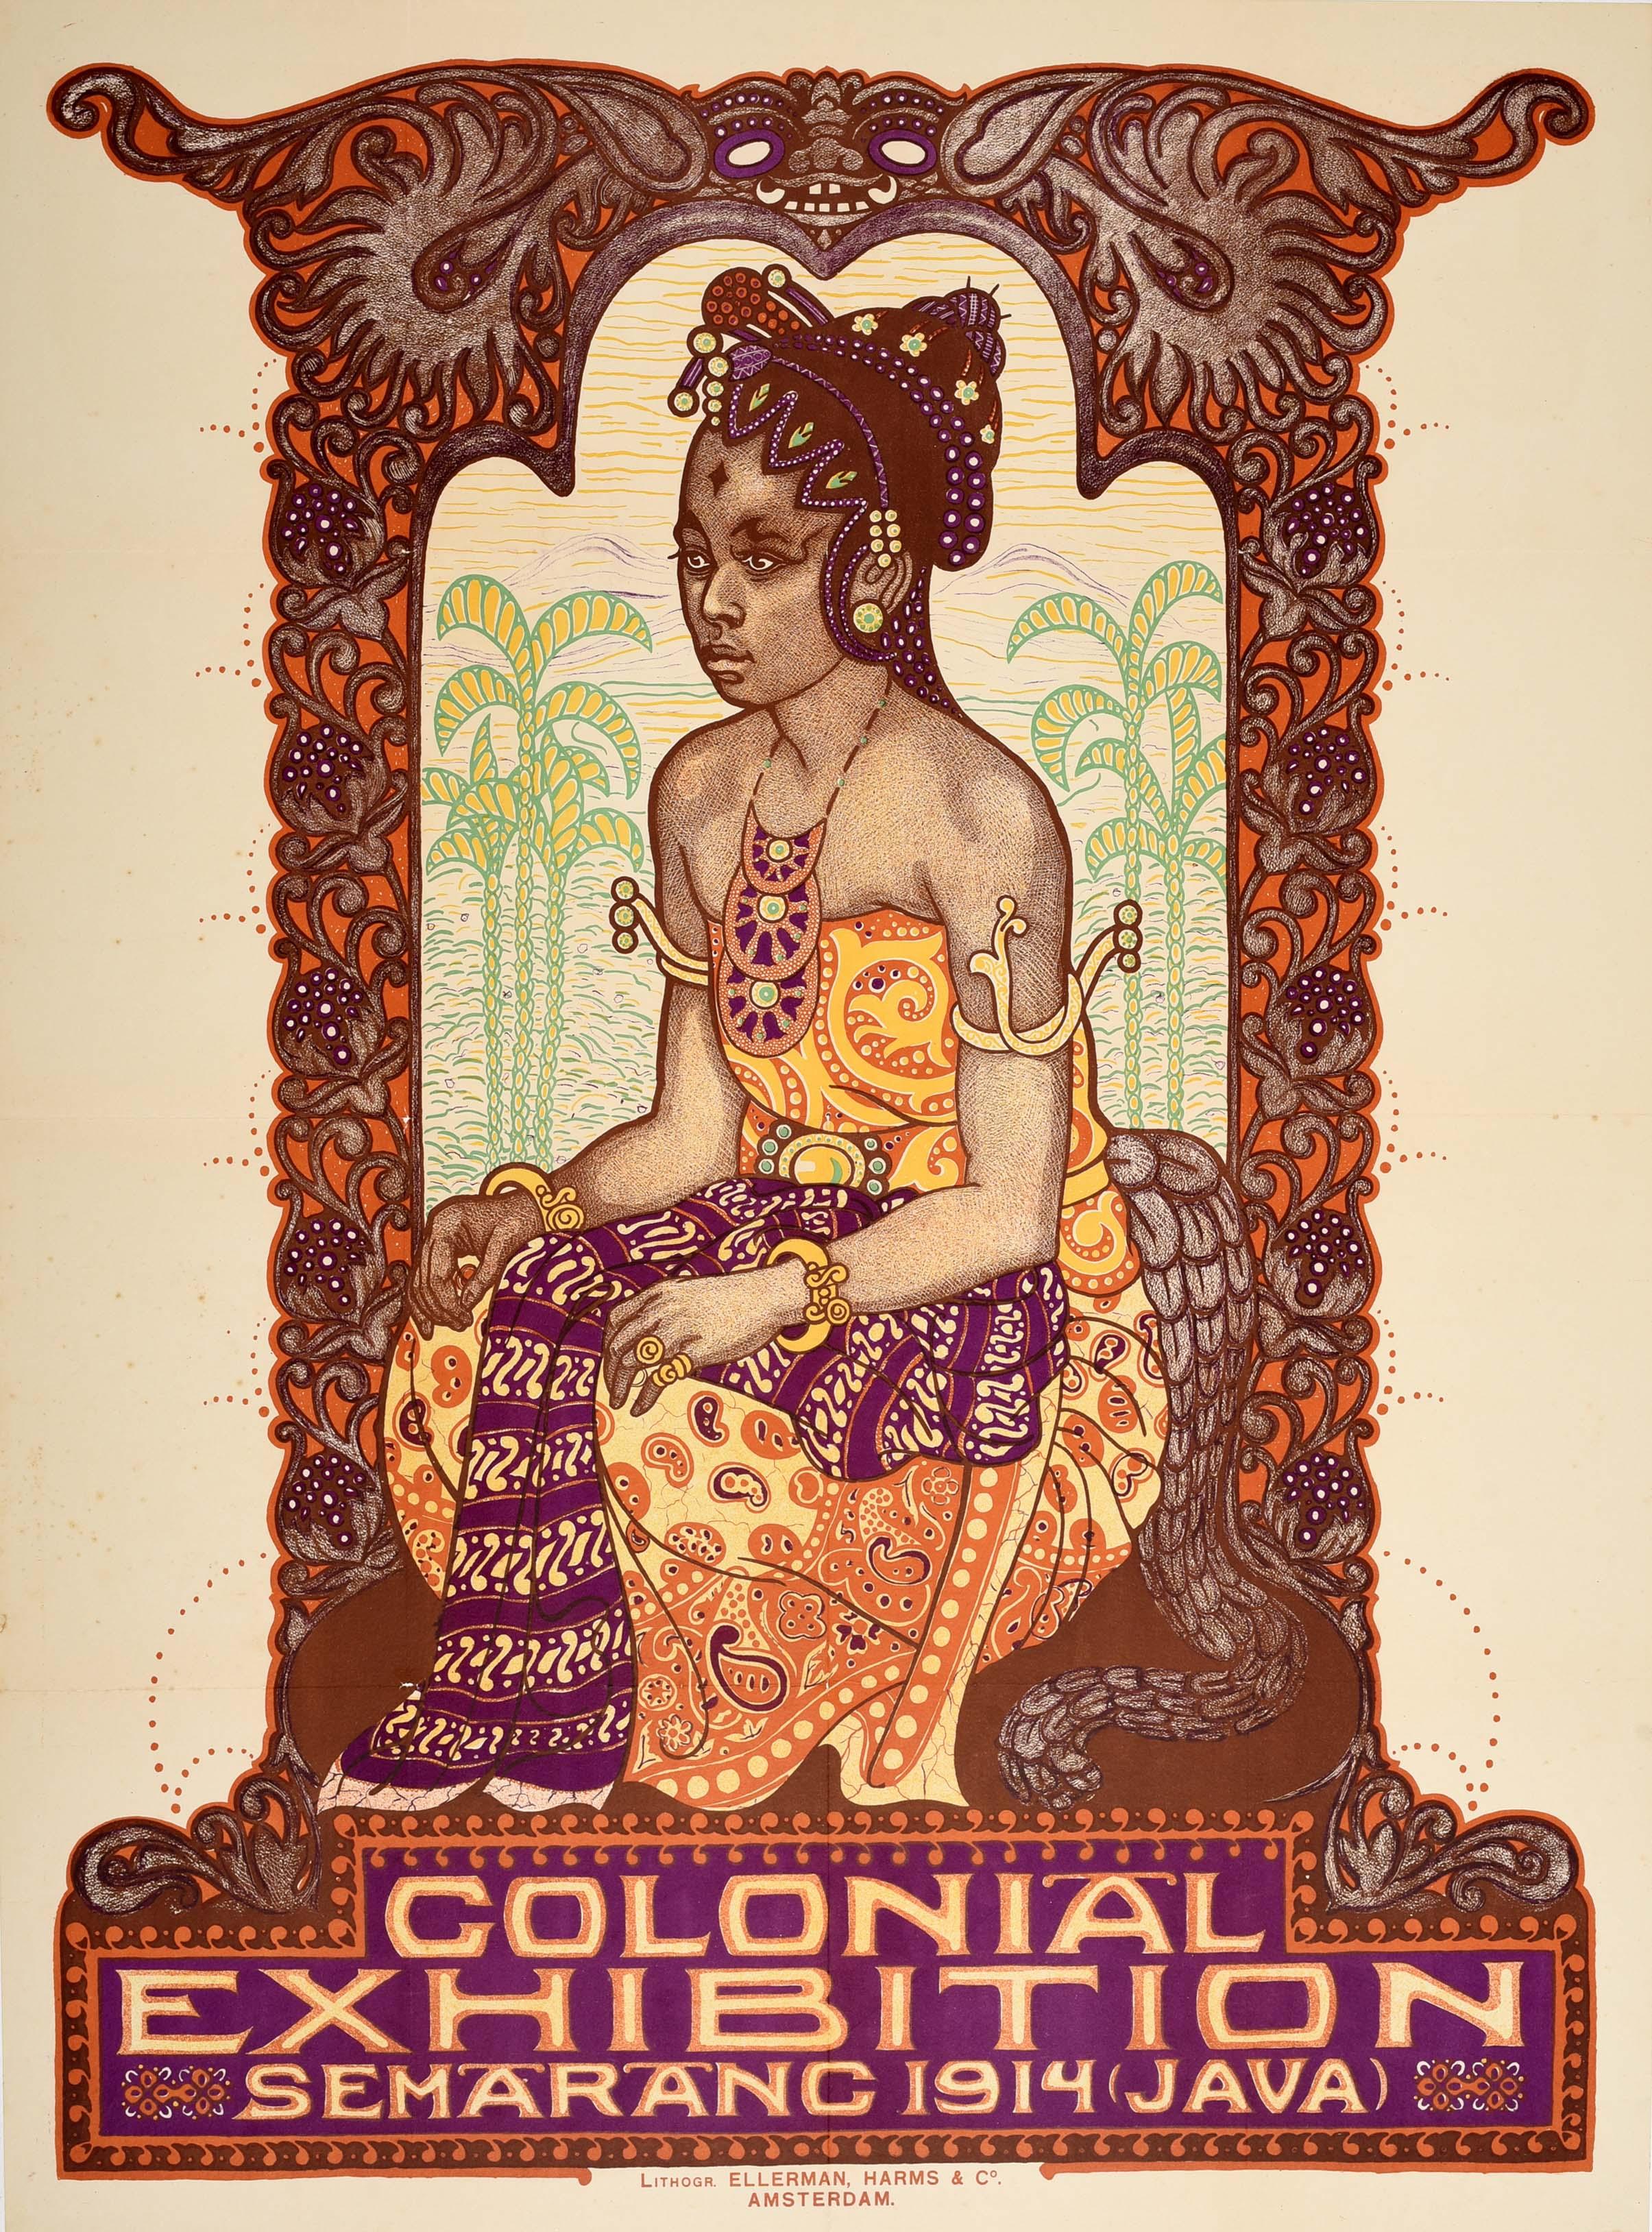 Albert Hahn Print – Original Antikes Originalplakat, Kolonialausstellung in Indonesien 1914, Java, Indonesien